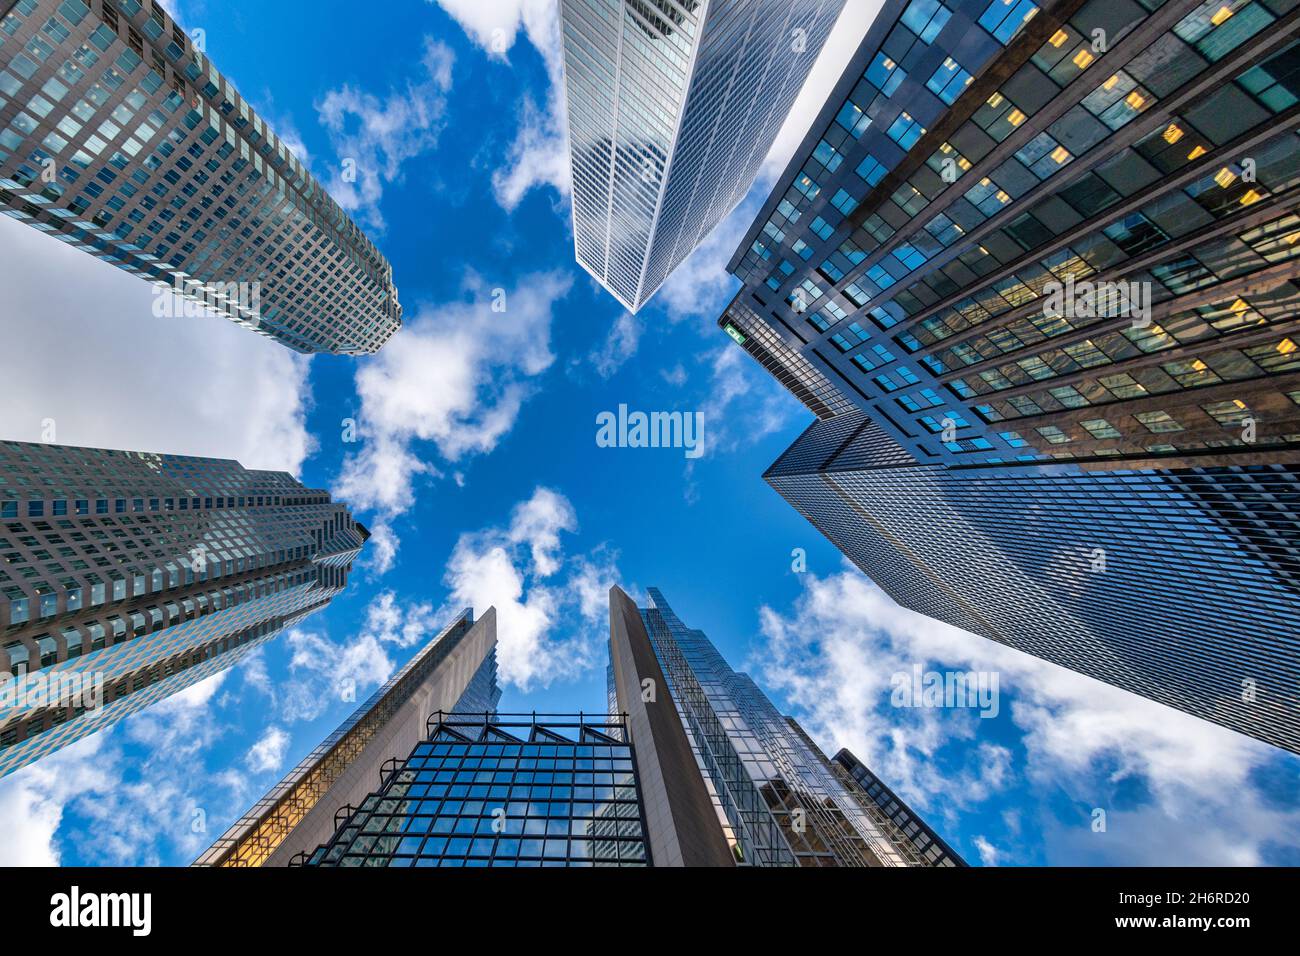 Directement sous la vue grand angle des gratte-ciels du quartier financier de Toronto, Canada.17 novembre 2021 Banque D'Images